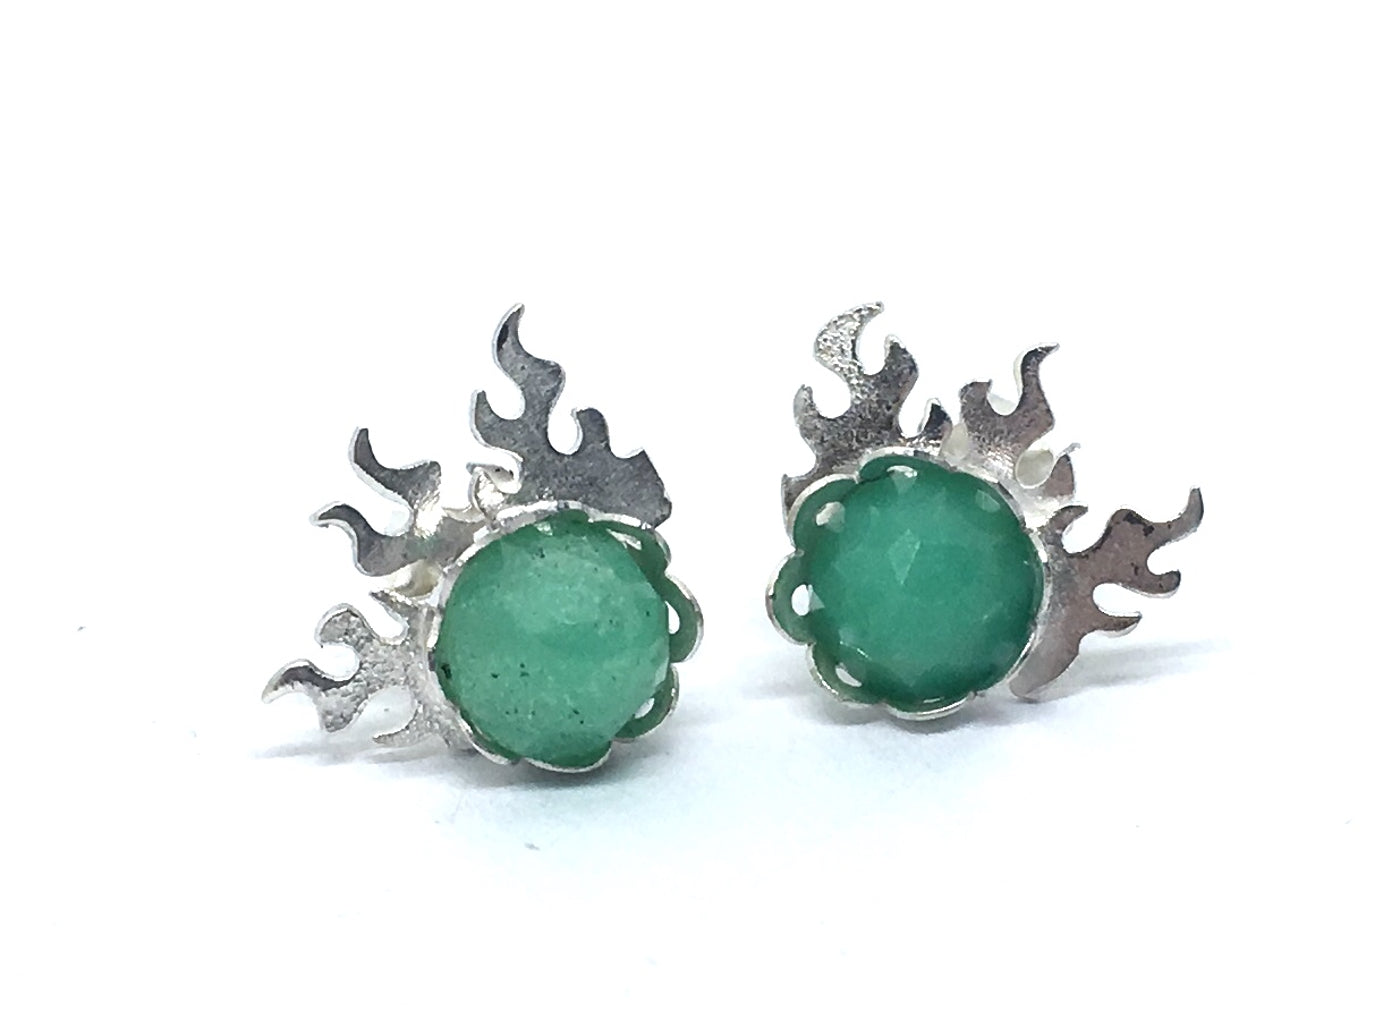 fire earrings with chrysoprase gemstones in sterling silver